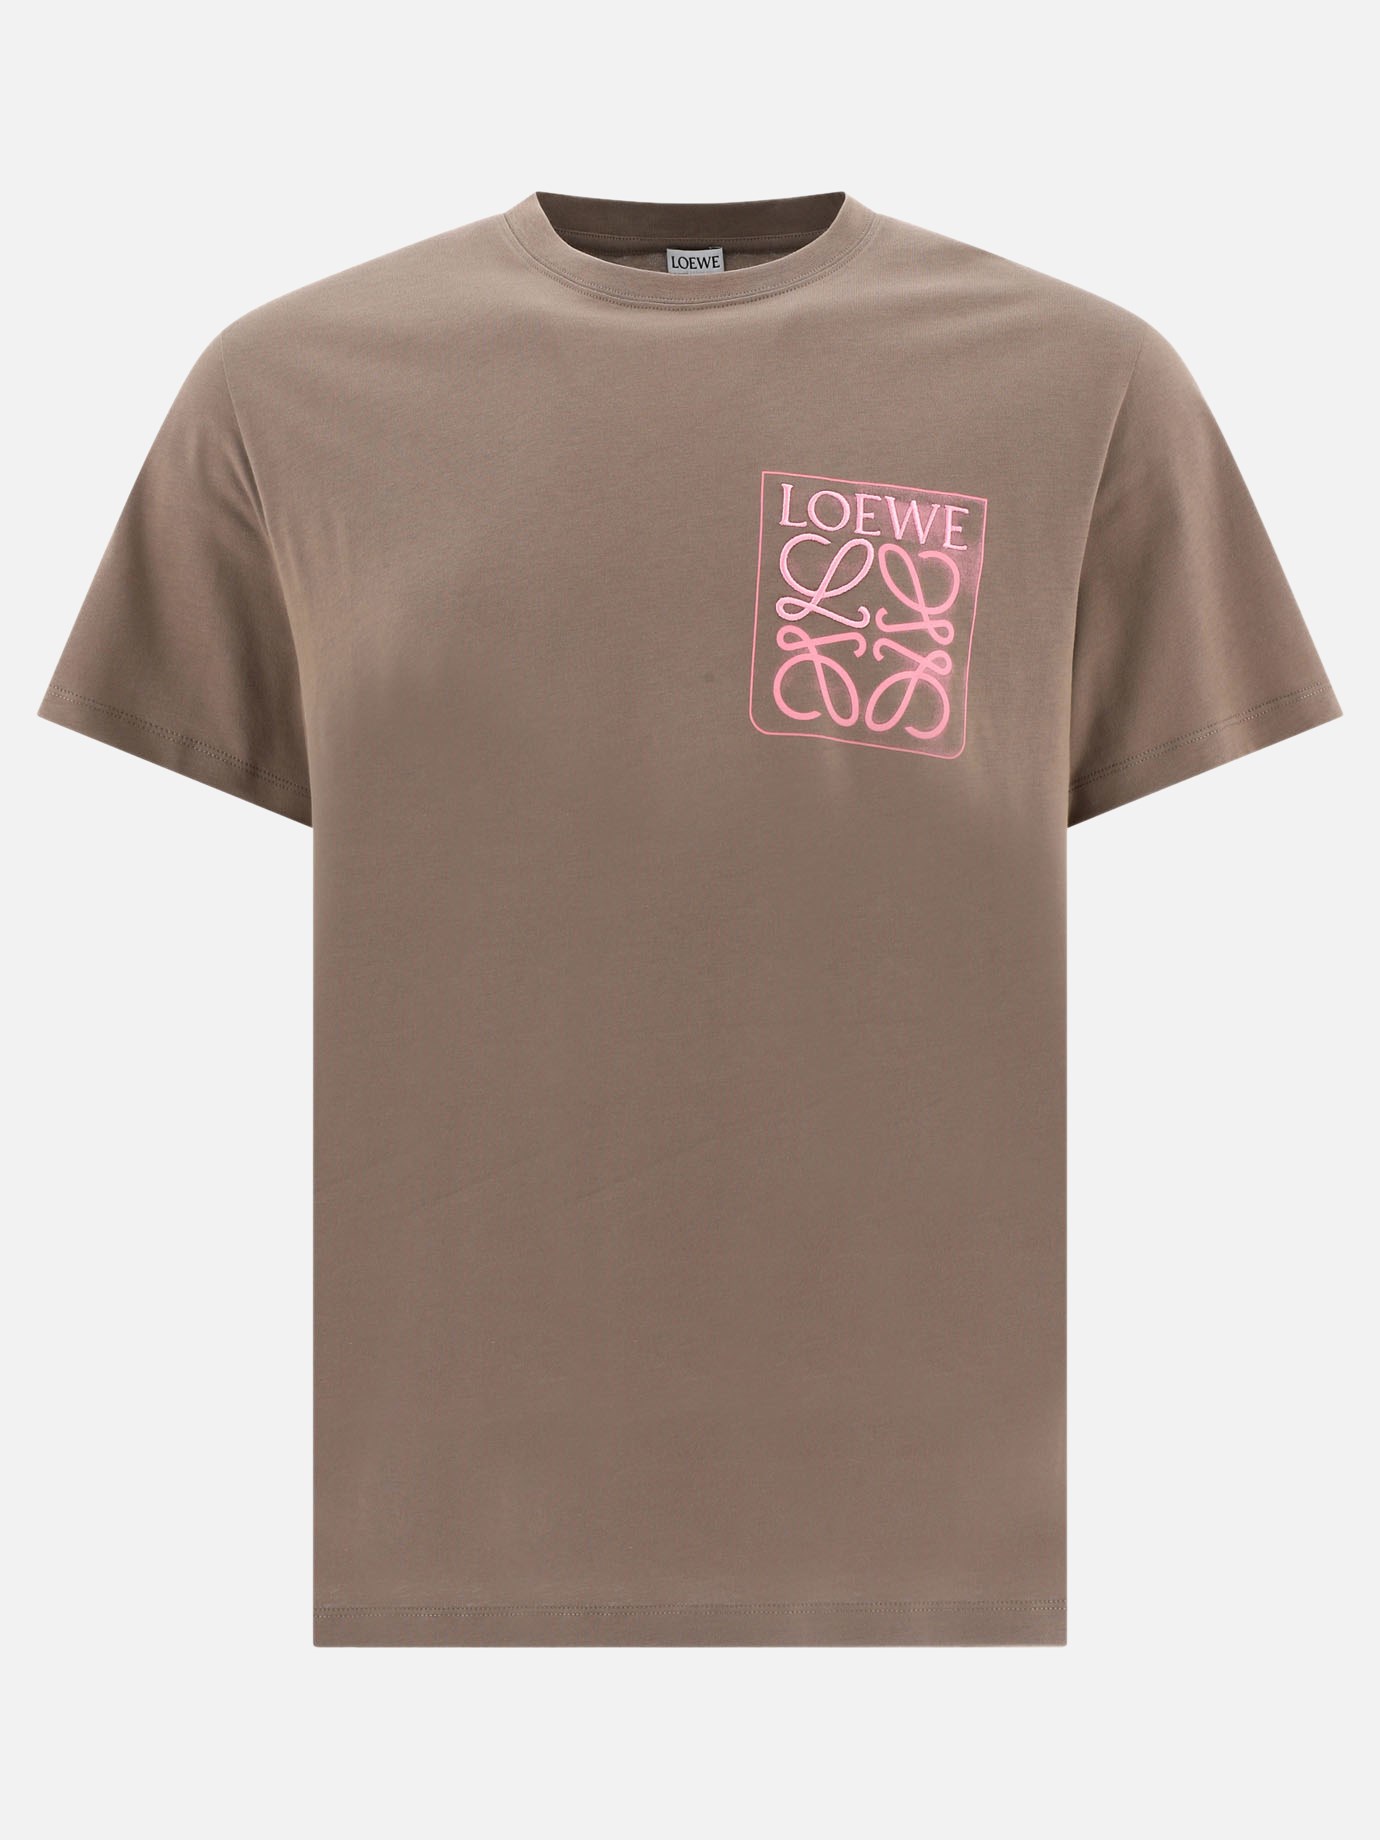  Anagram  t-shirtby Loewe - 5